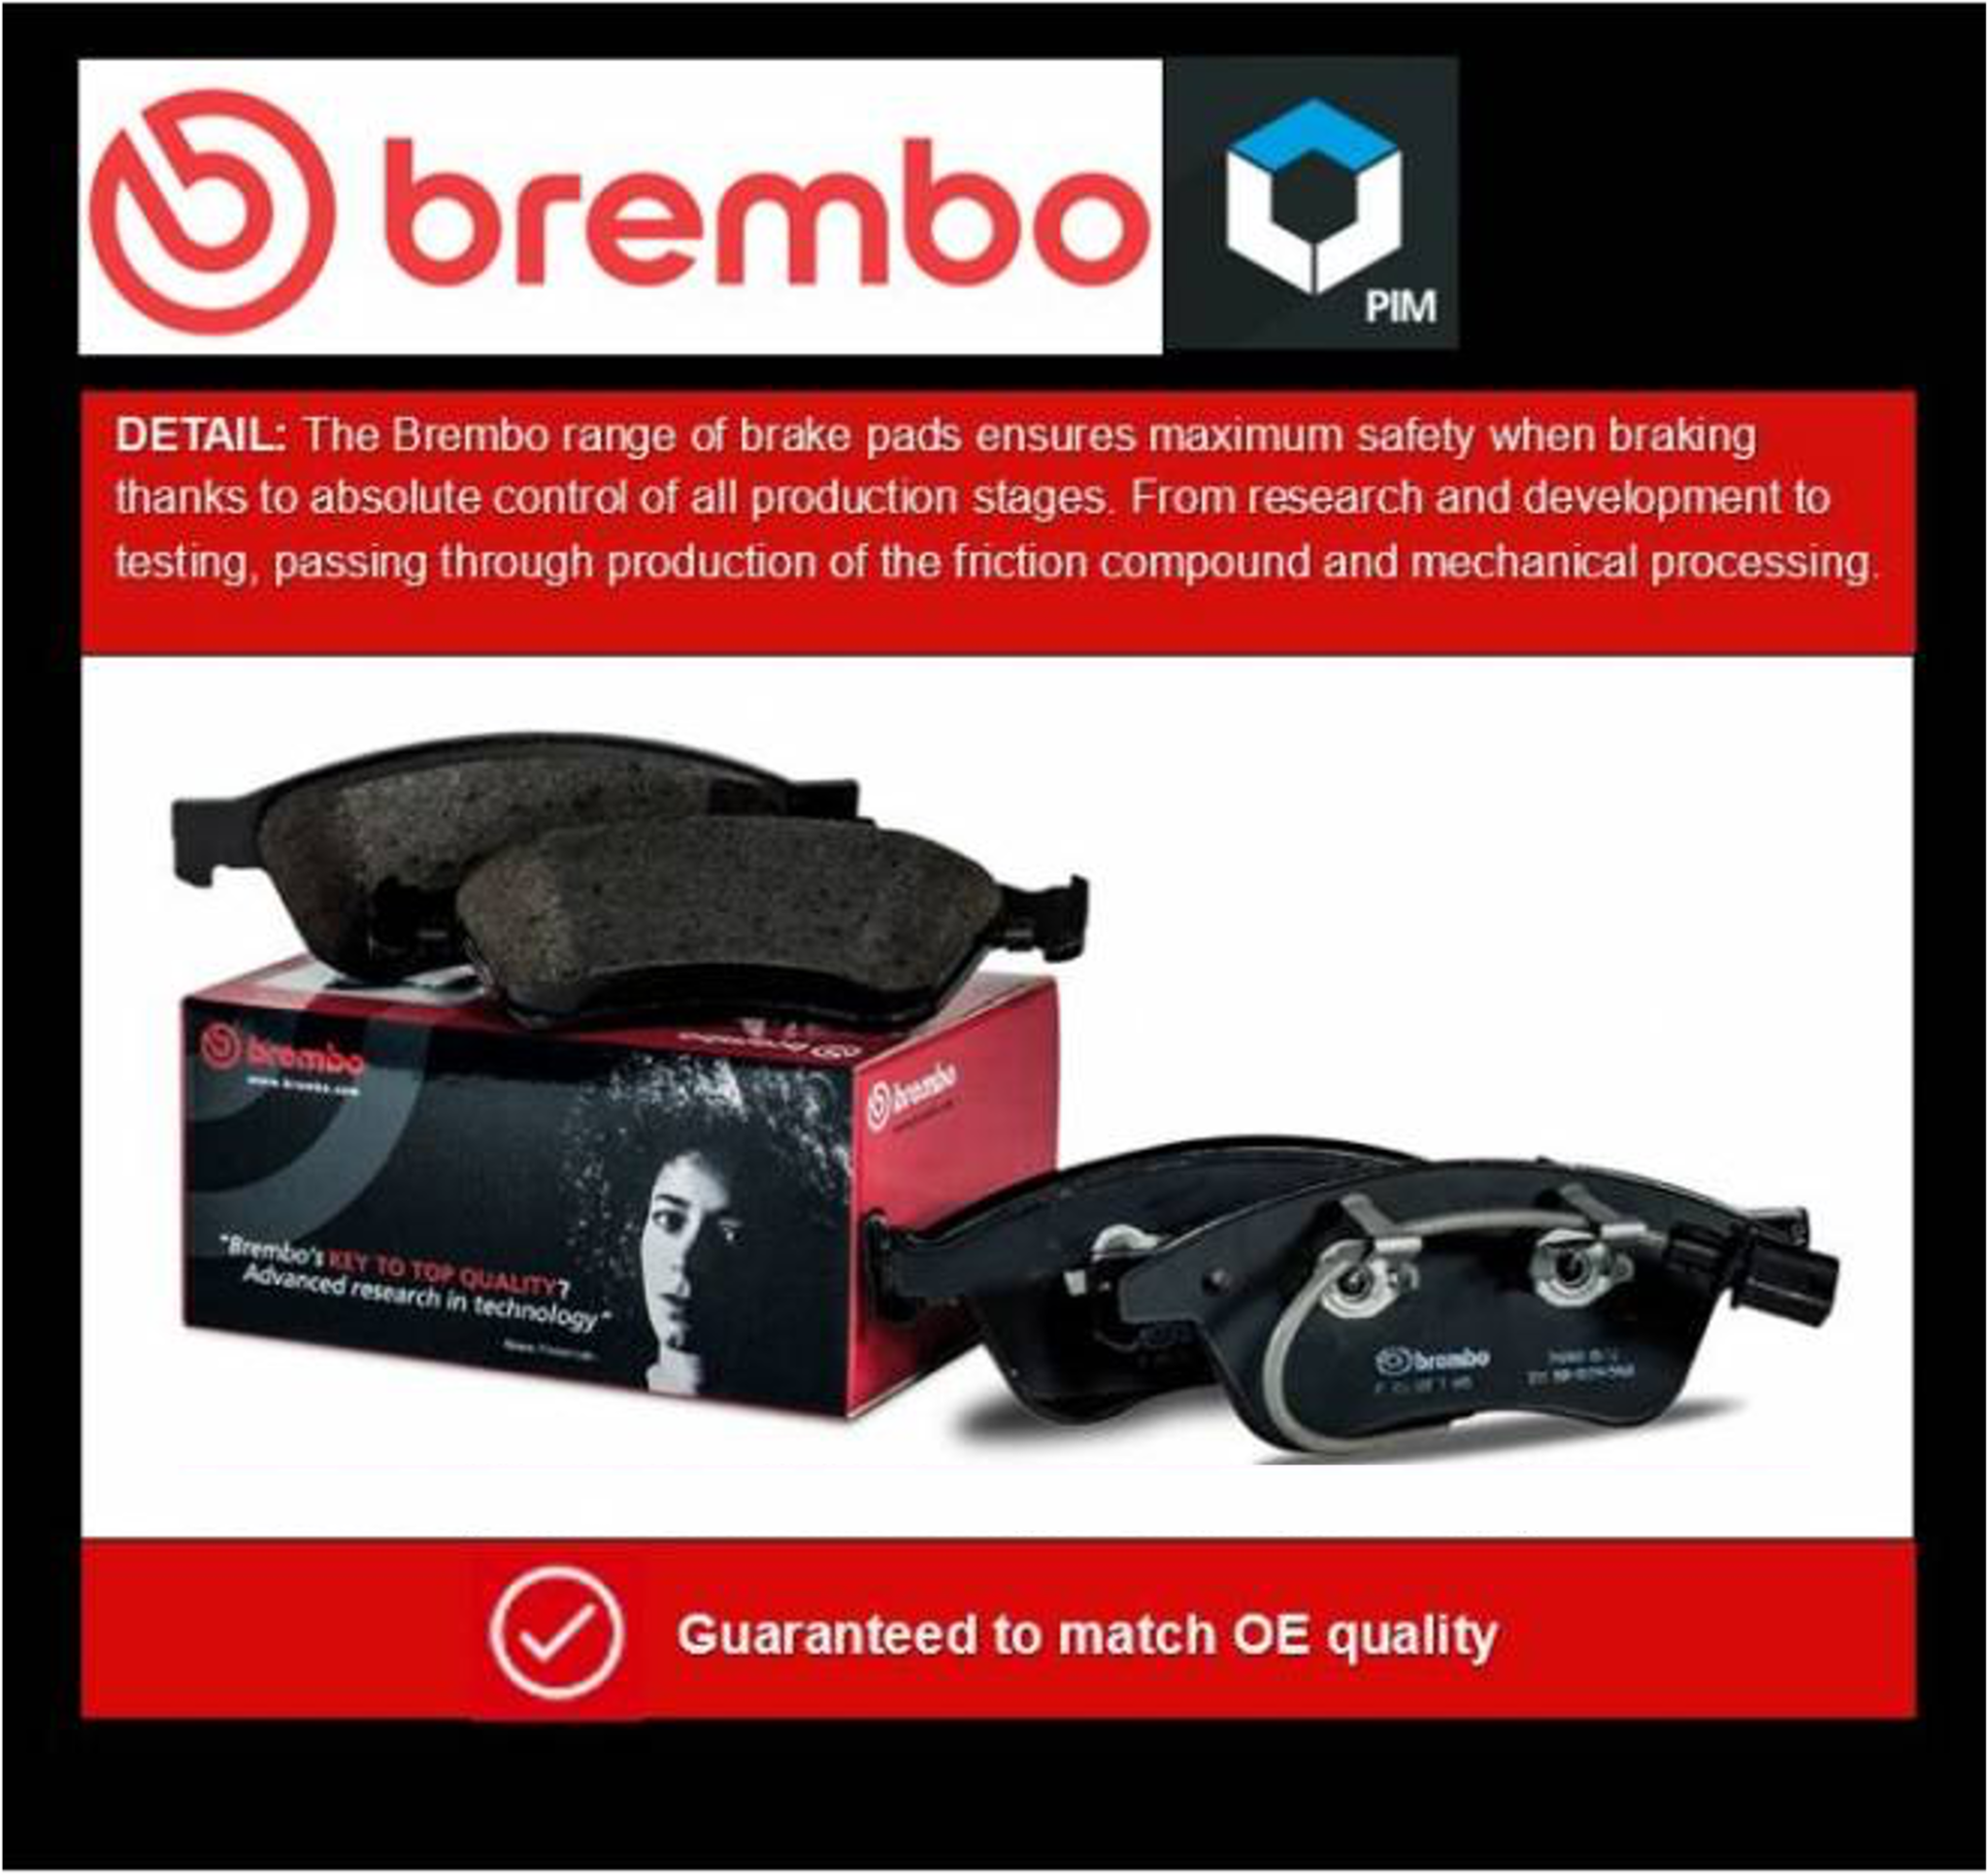 PartsinMotion.co.uk adds Brembo to its brake range